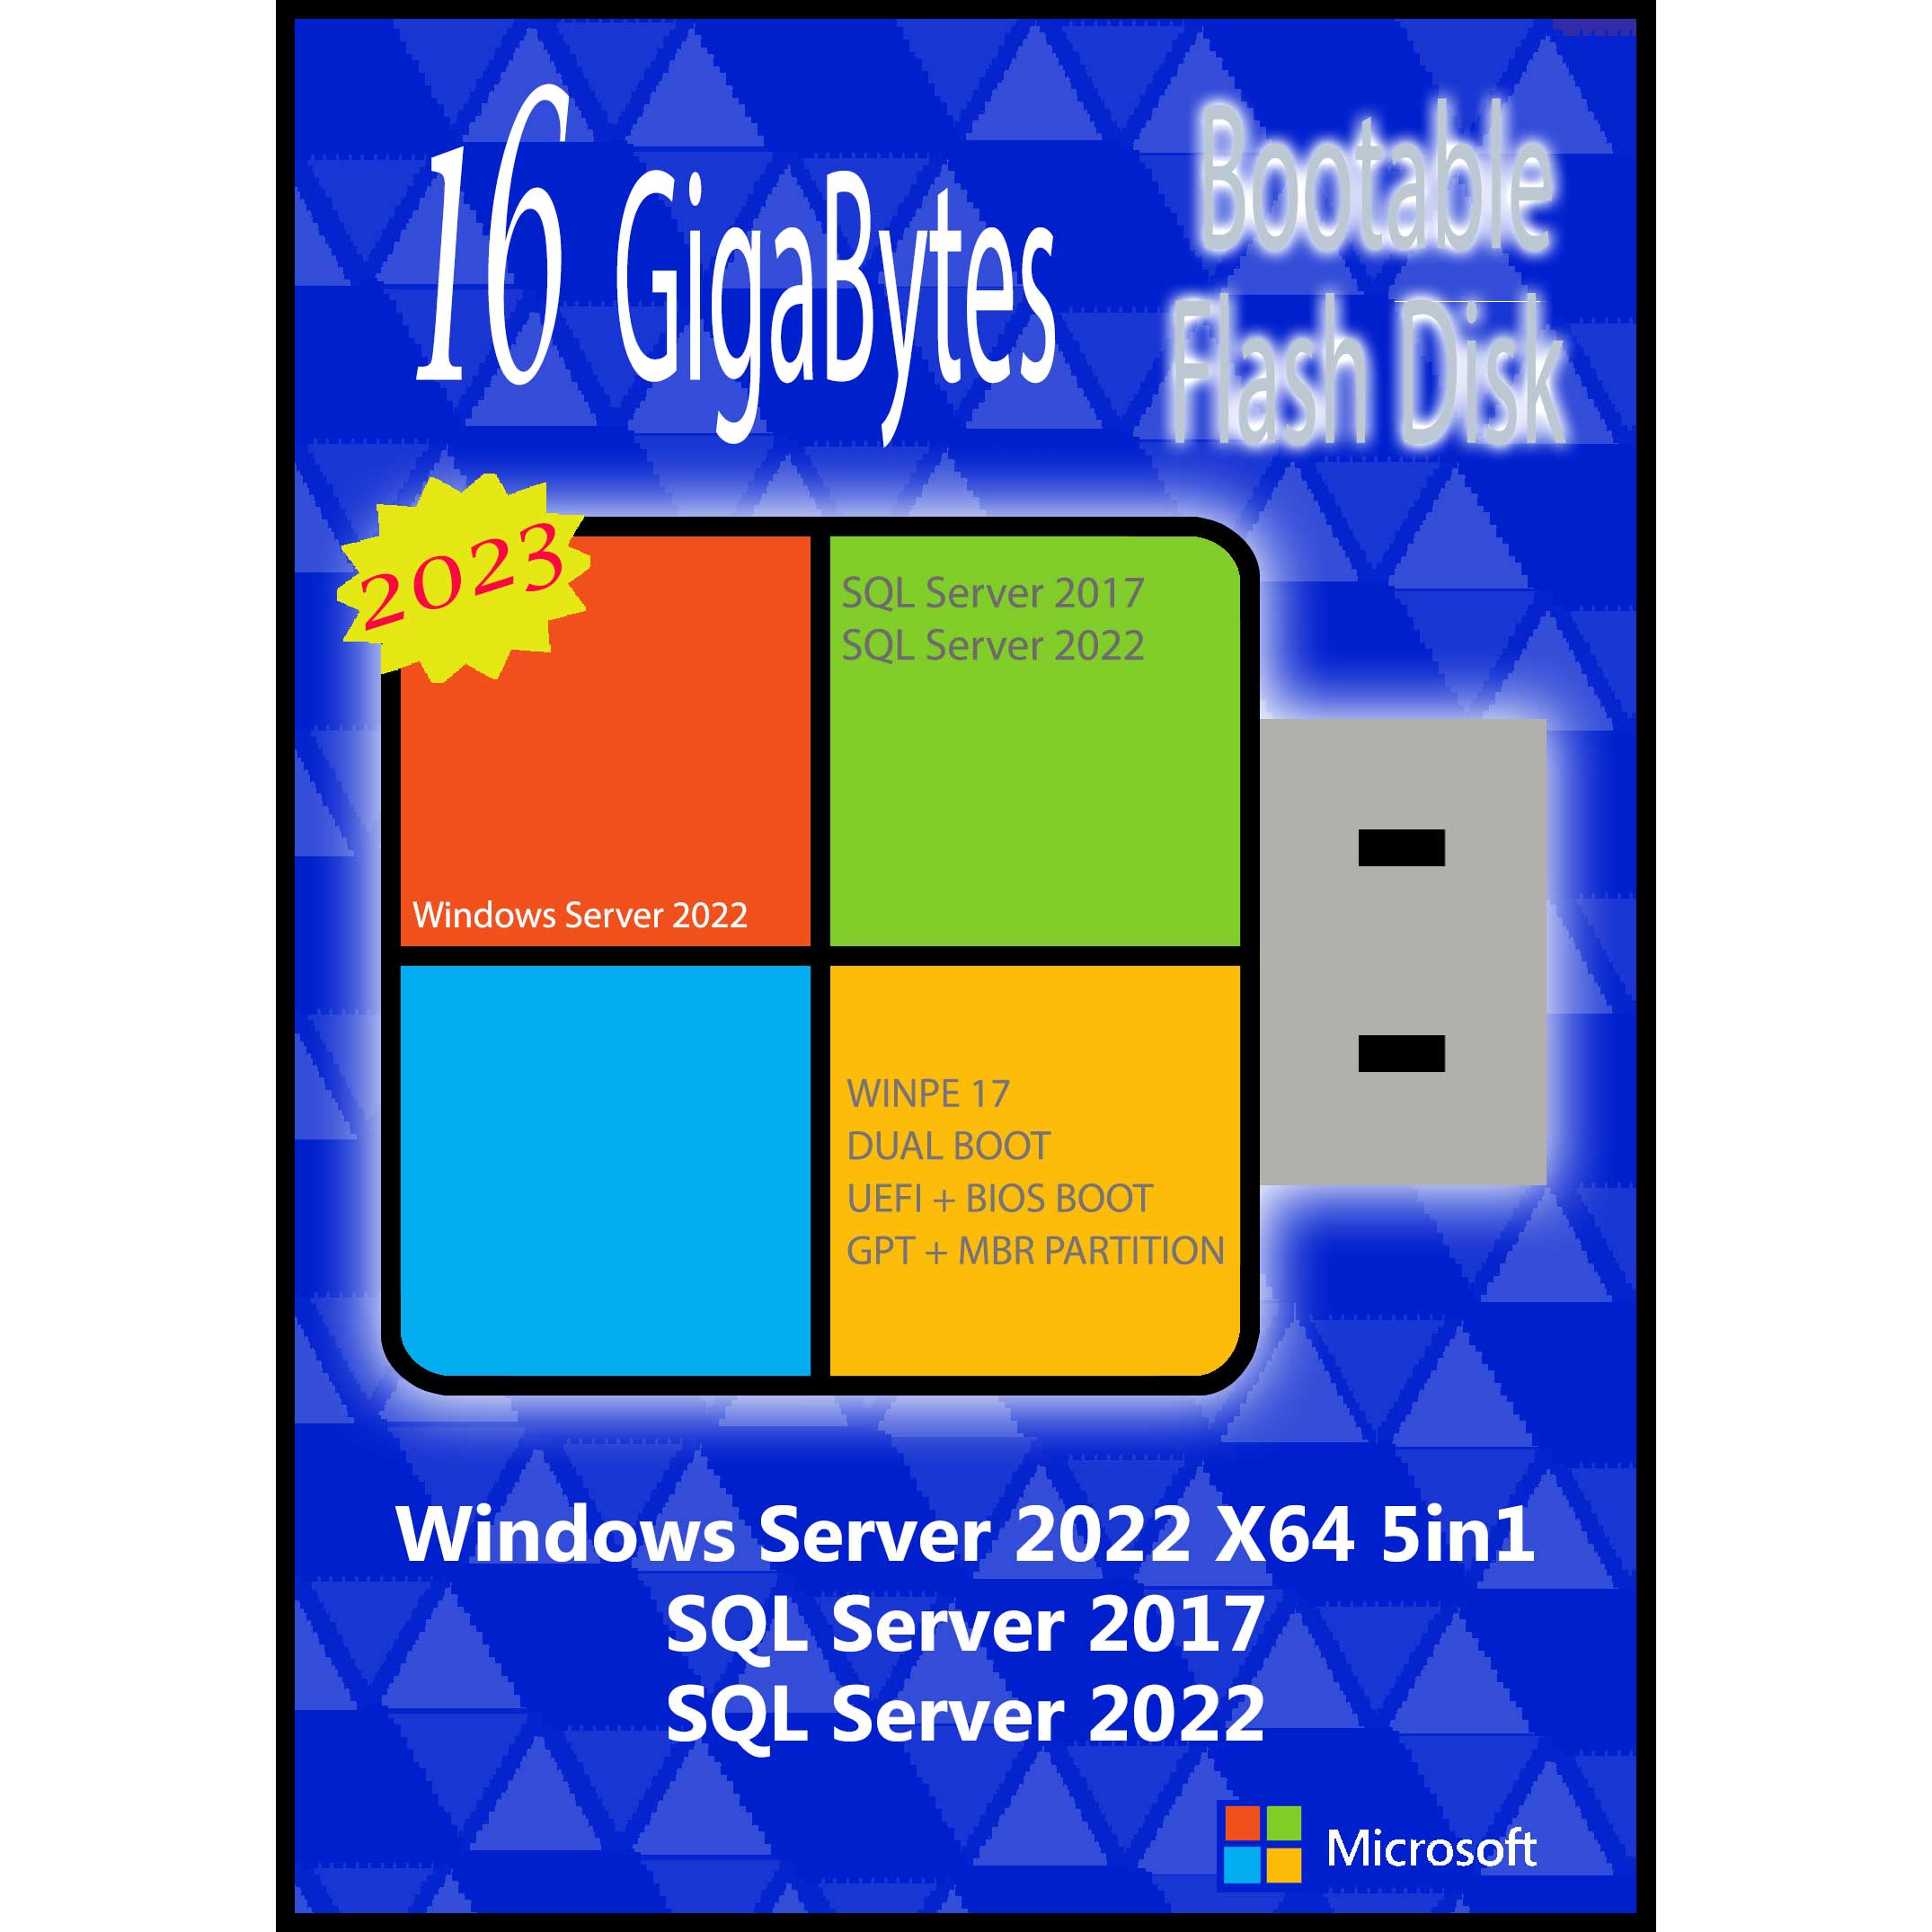 سیستم عامل Windows Server 2022 5in1 X64 - 2023 نشر مایکروسافت 